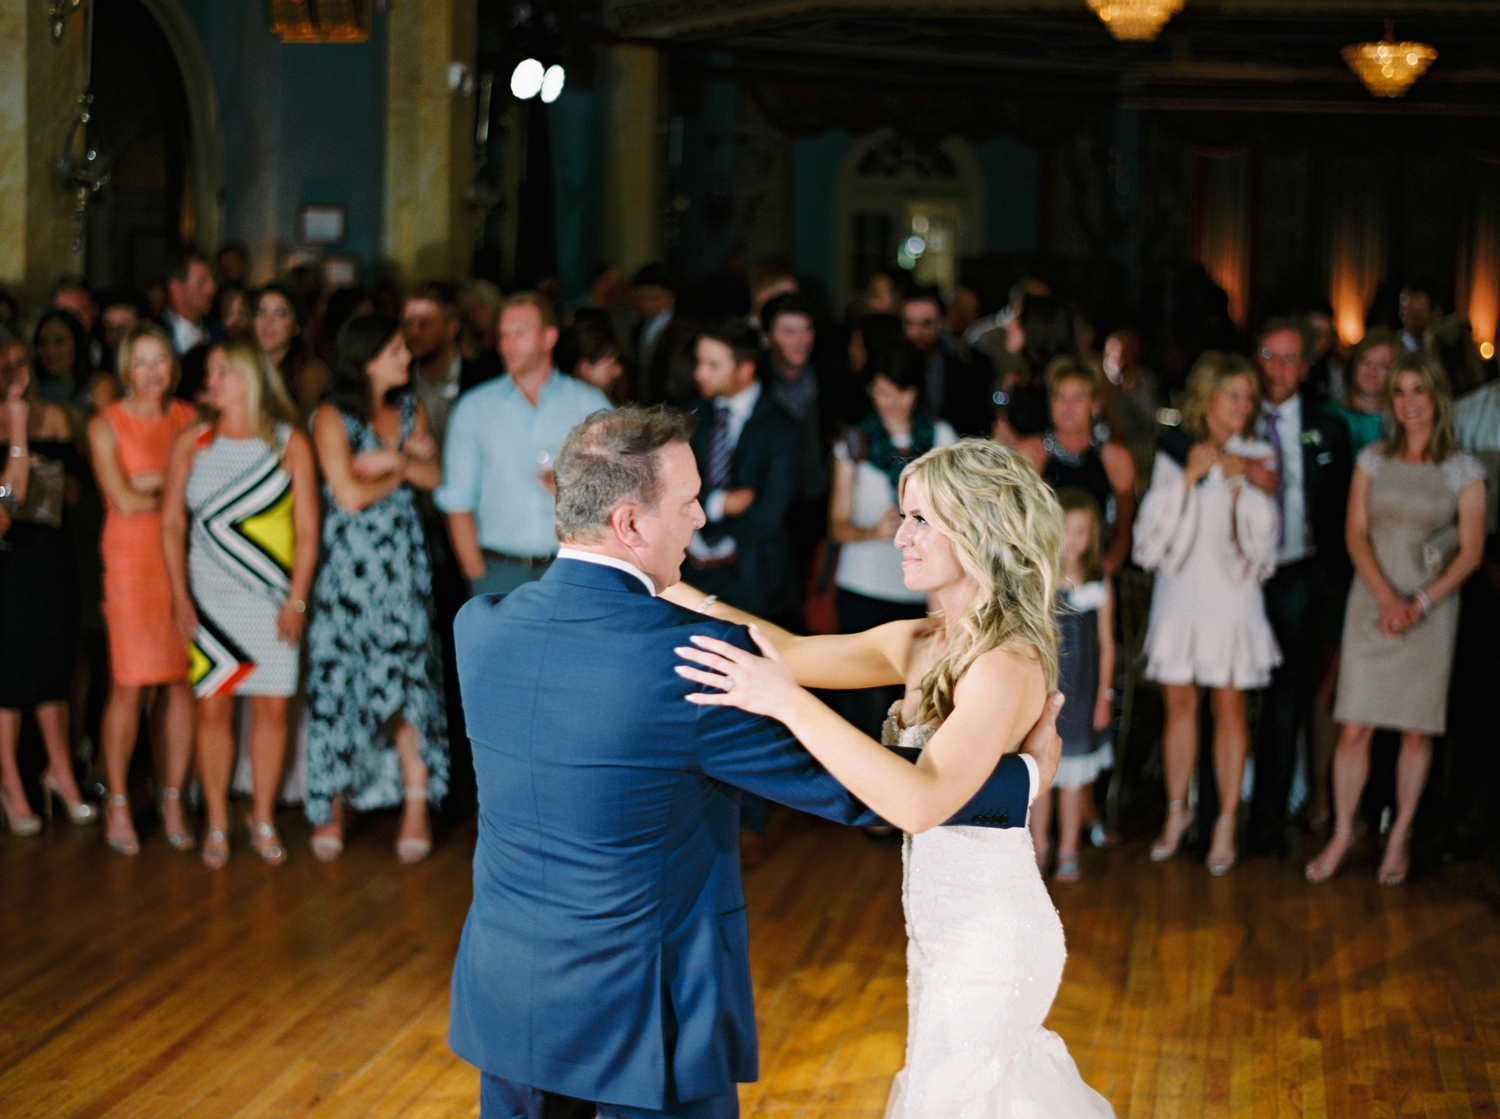 Fairmont Banff Springs Hotel wedding photographers | Justine Milton Fine Art Film Photography | Cascade Ballroom Wedding Reception | Lynn Fletcher Weddings Decor